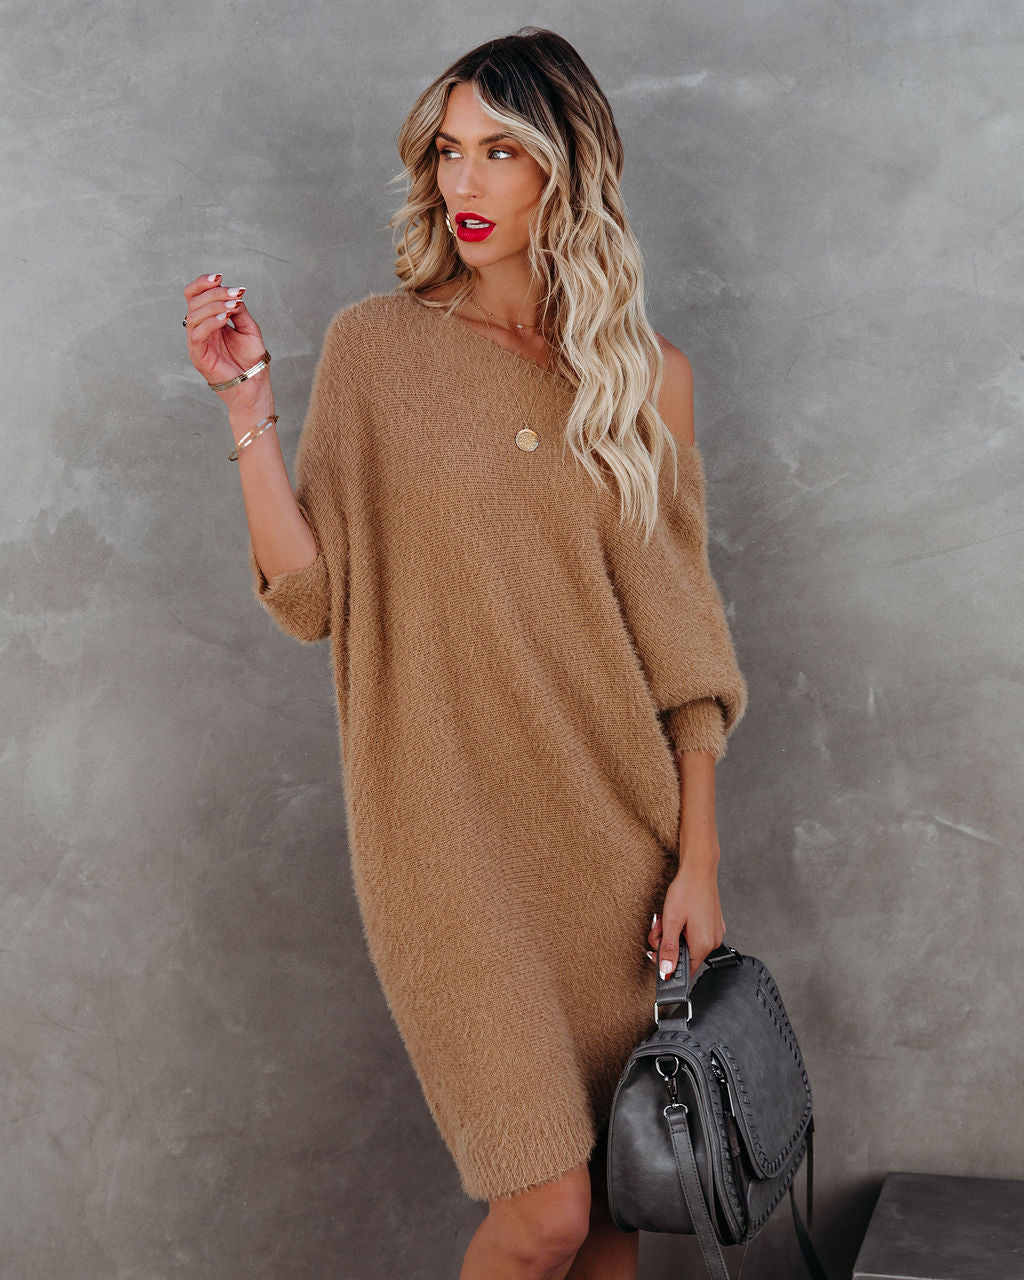 Cecelia Asymmetrical Knit Sweater Dress - Camel